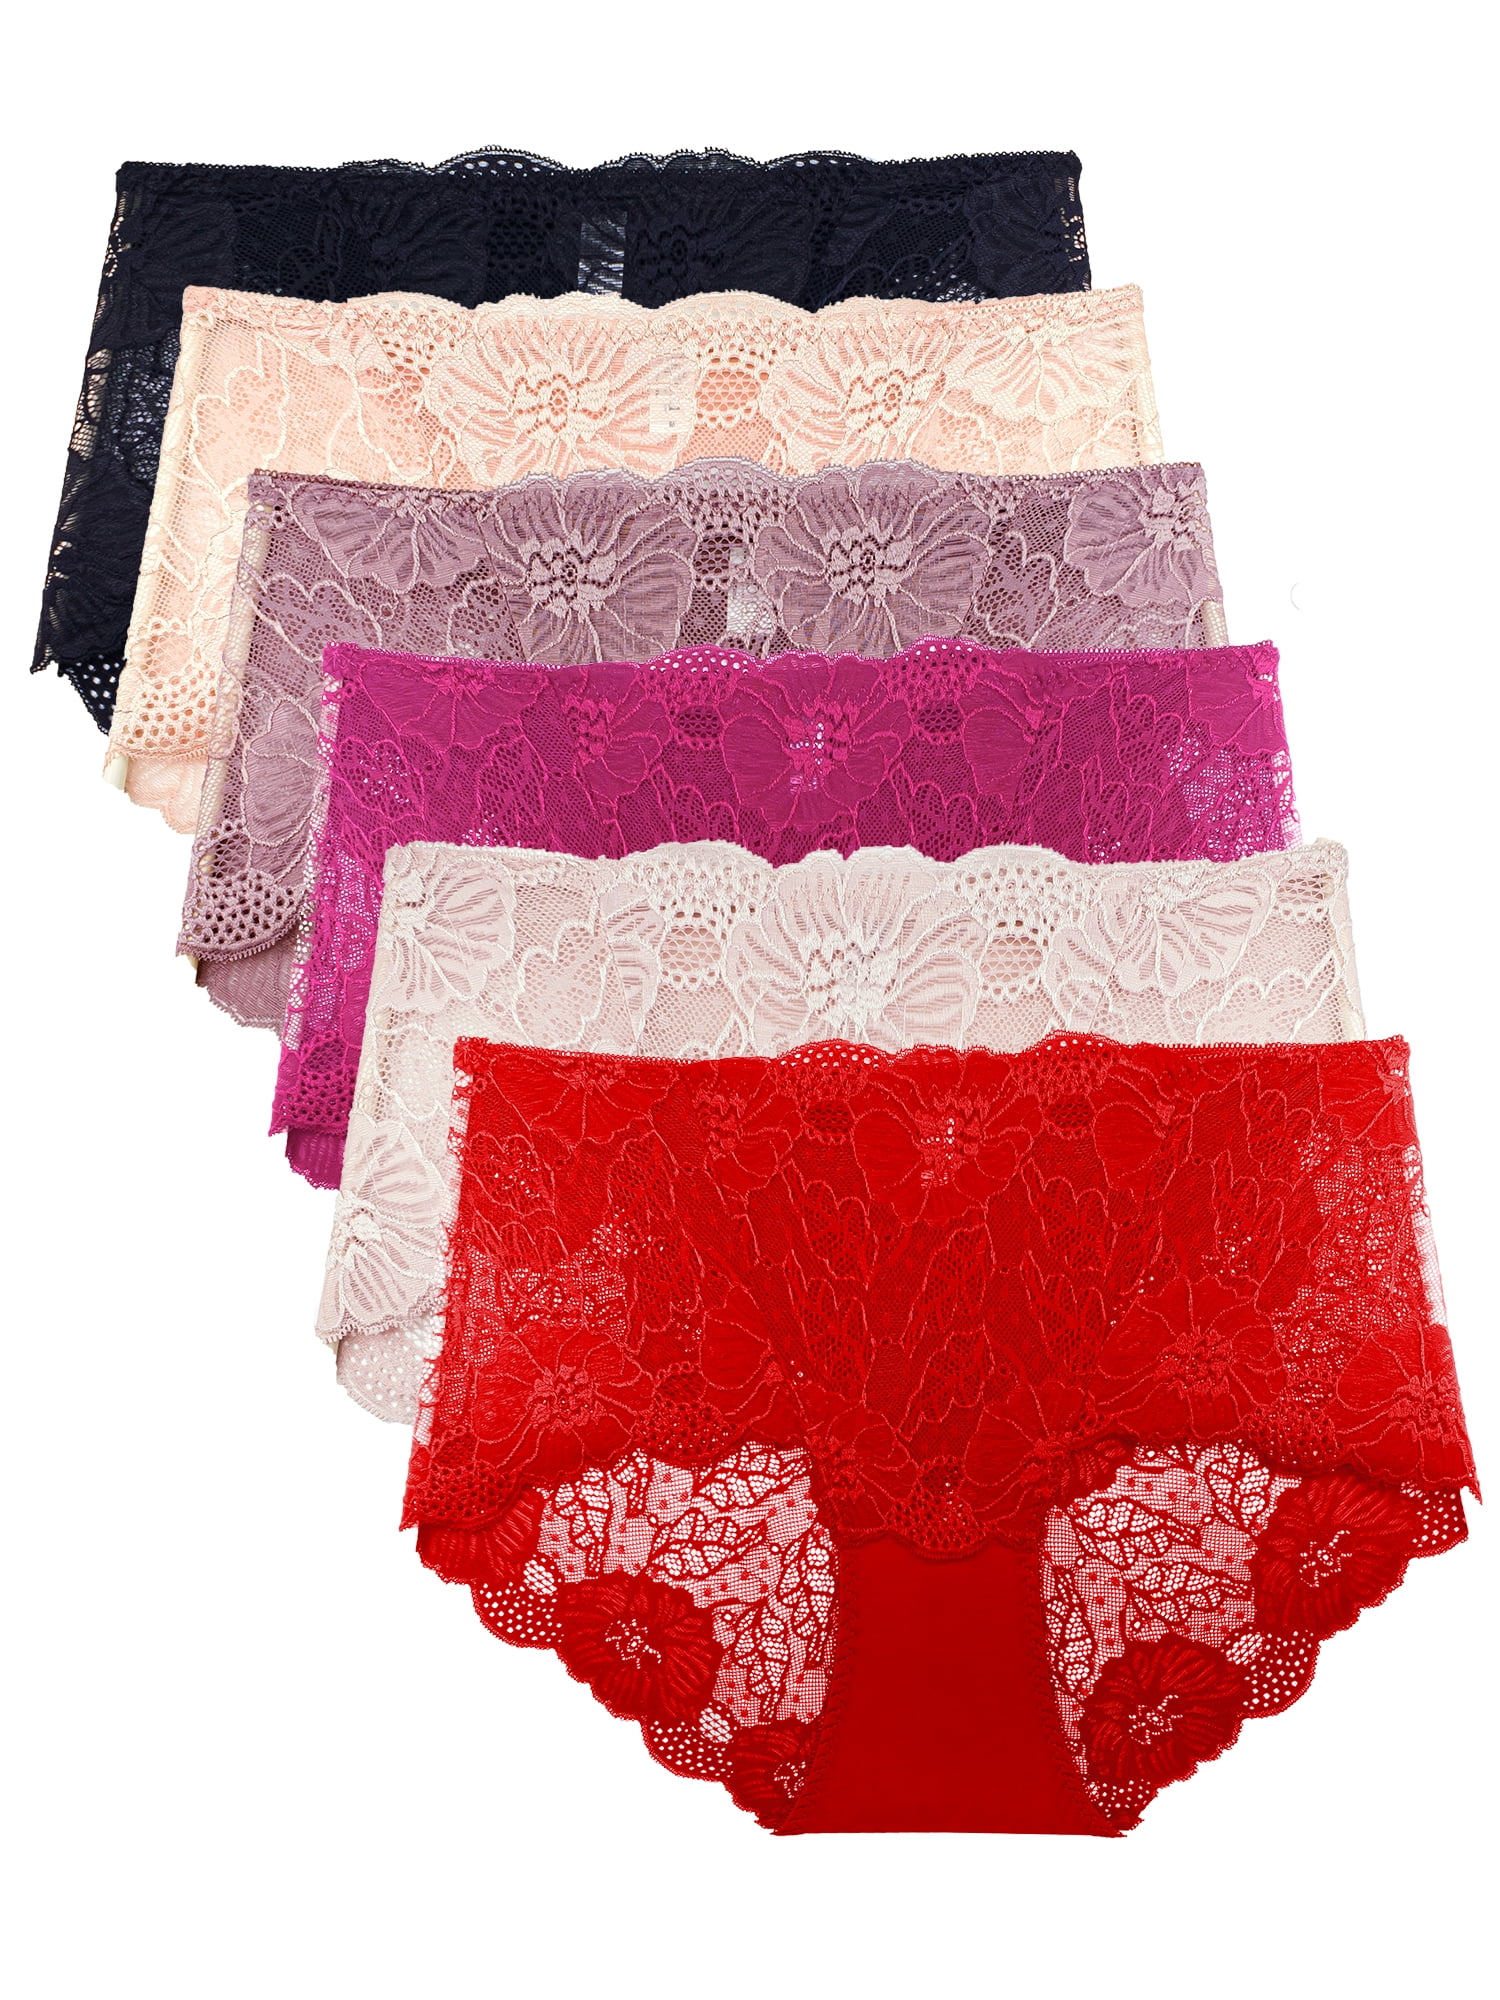 Barbras 6 Pack of Womens Regular /& Plus Size Lace Boyshort Panties